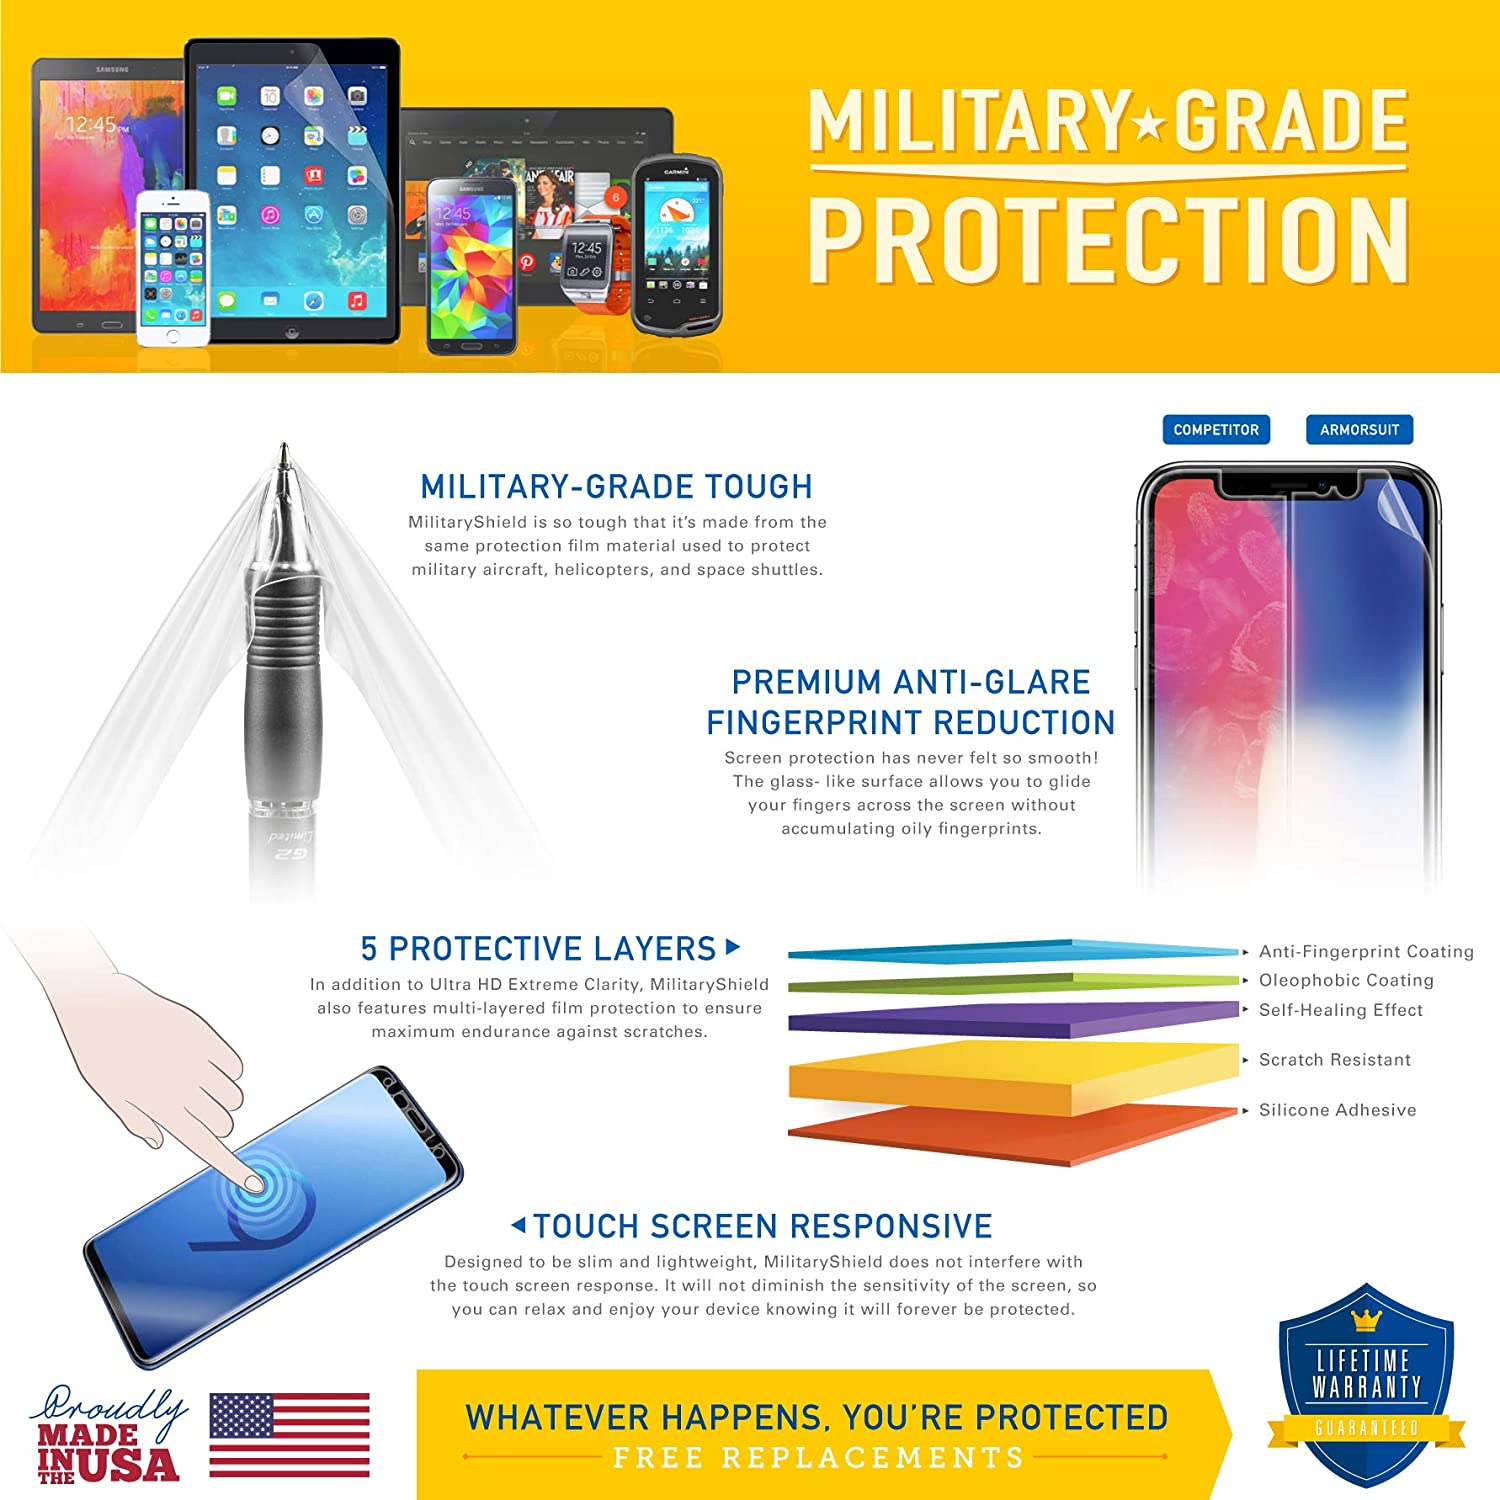 Samsung Galaxy Tab A 8.0" 2017 Screen Protector (SM-T380)